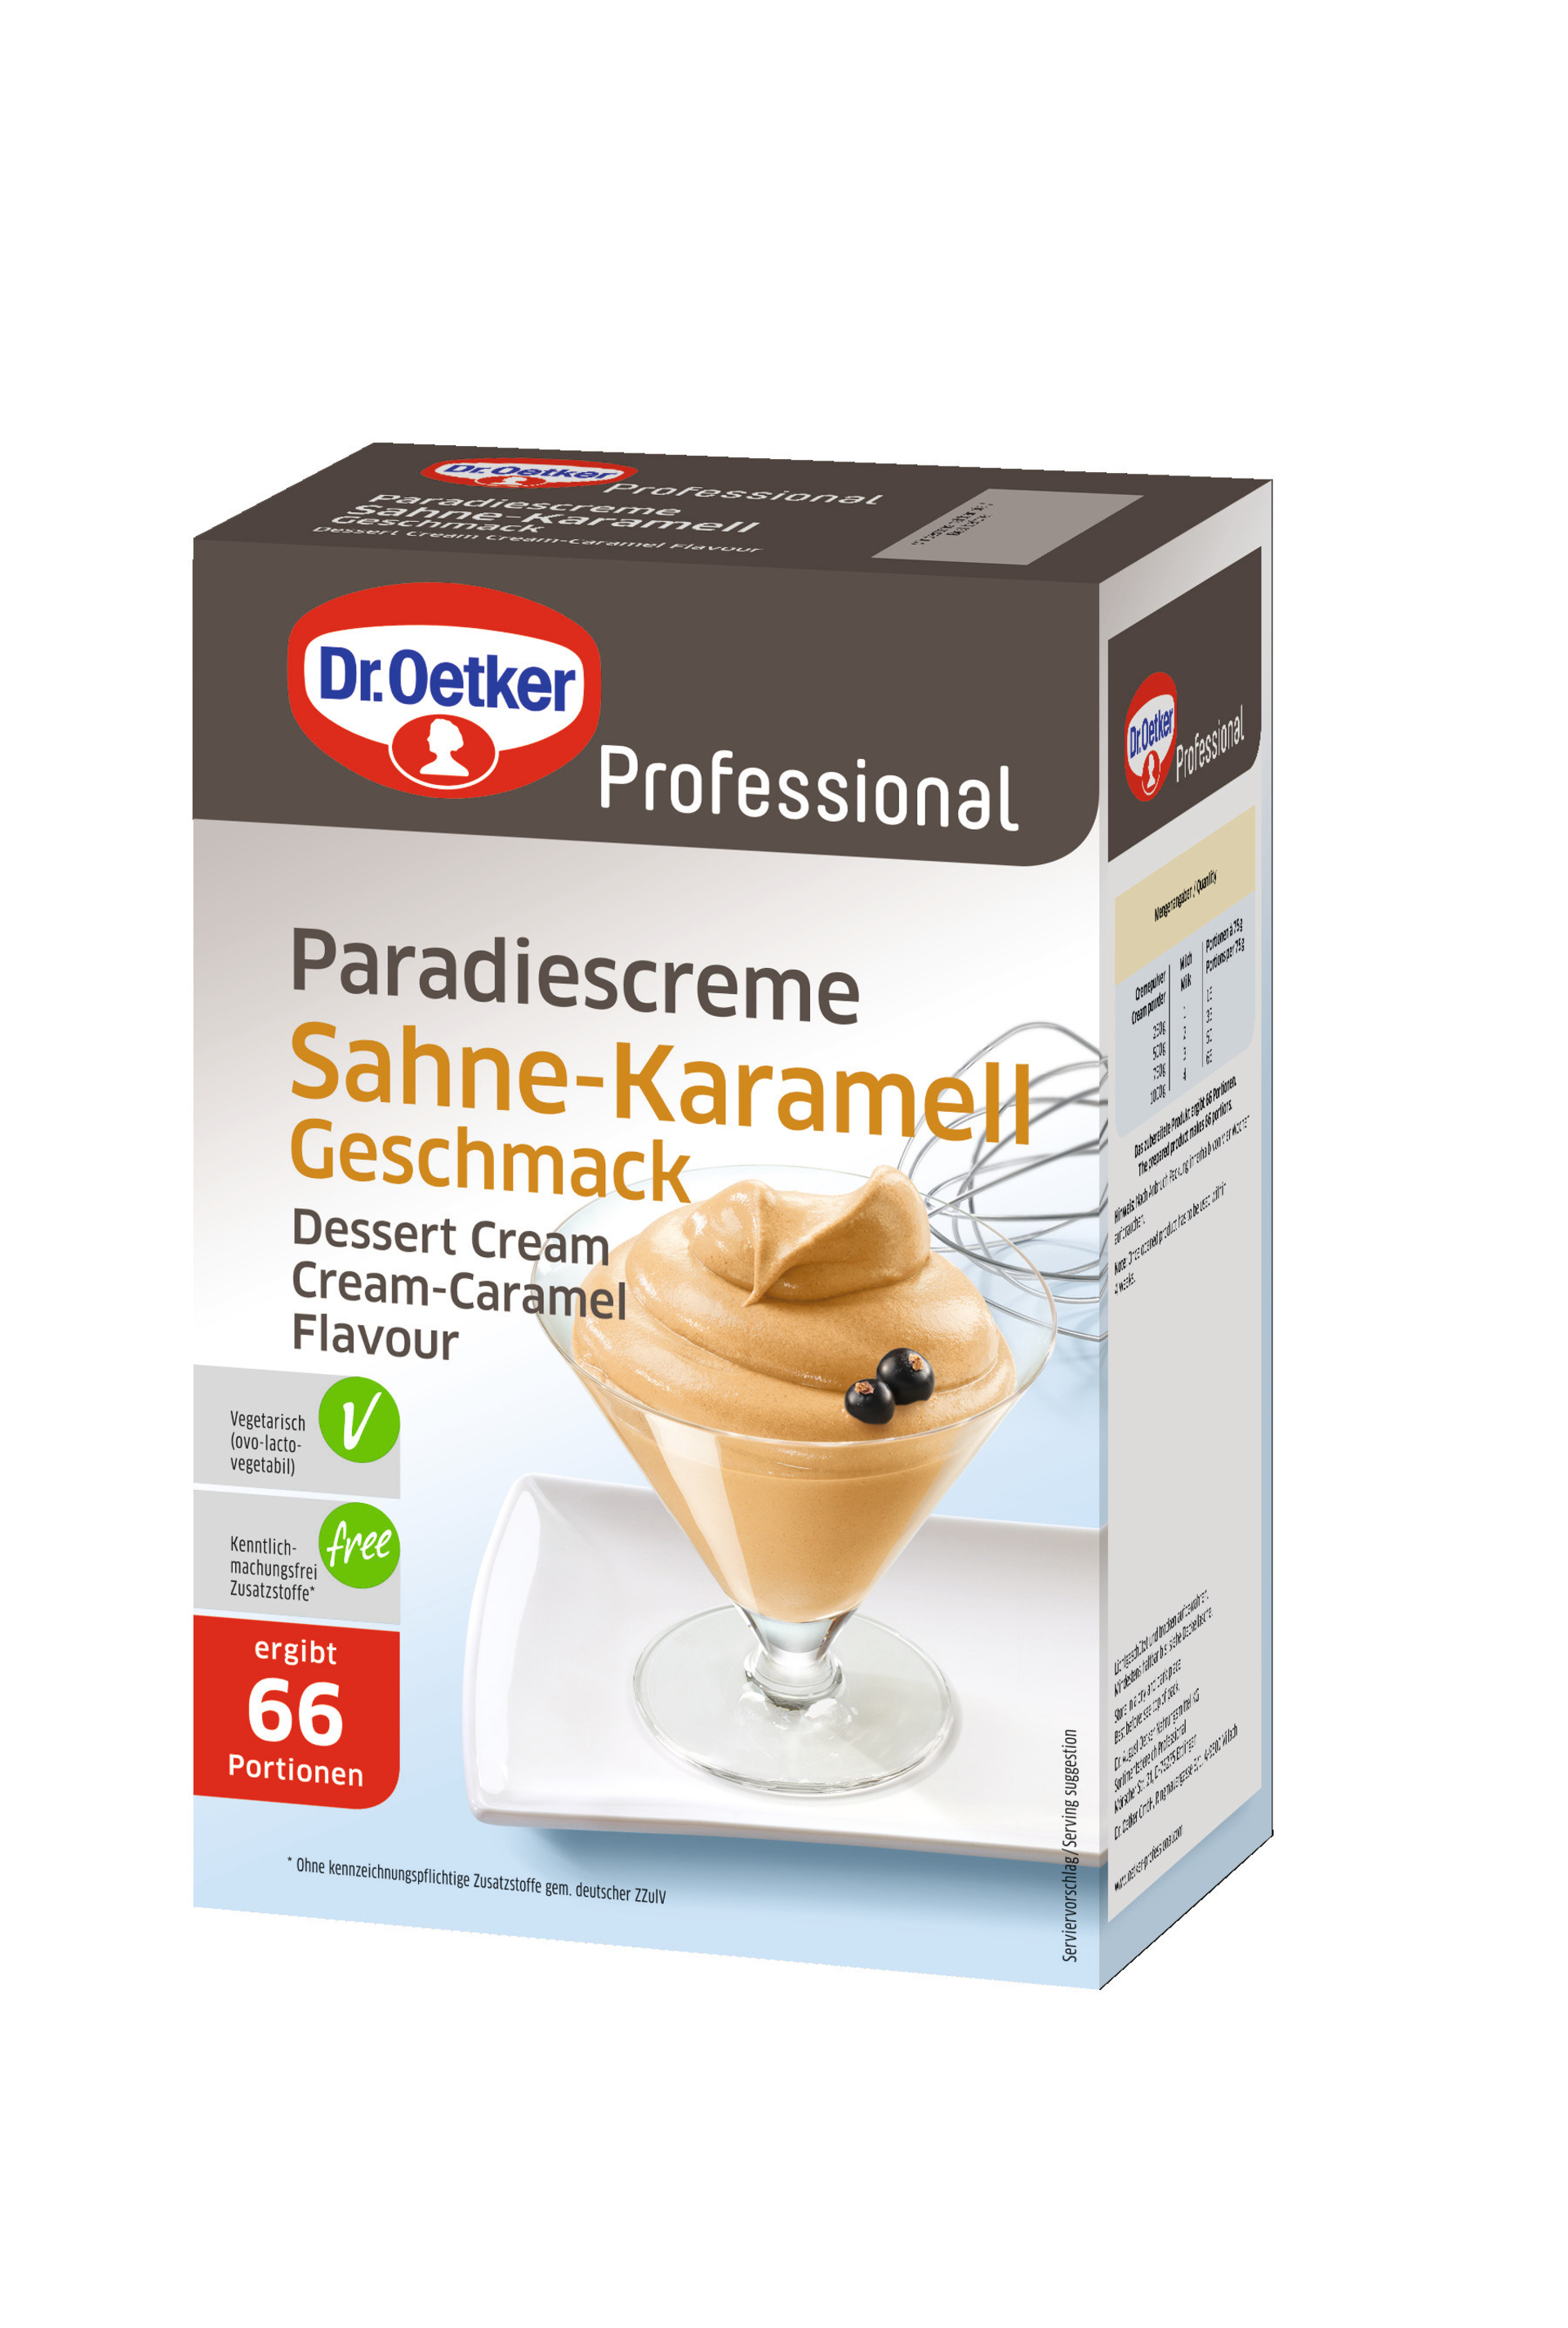 Paradiescreme Sahne-Karamell-Geschmack, 1000 g